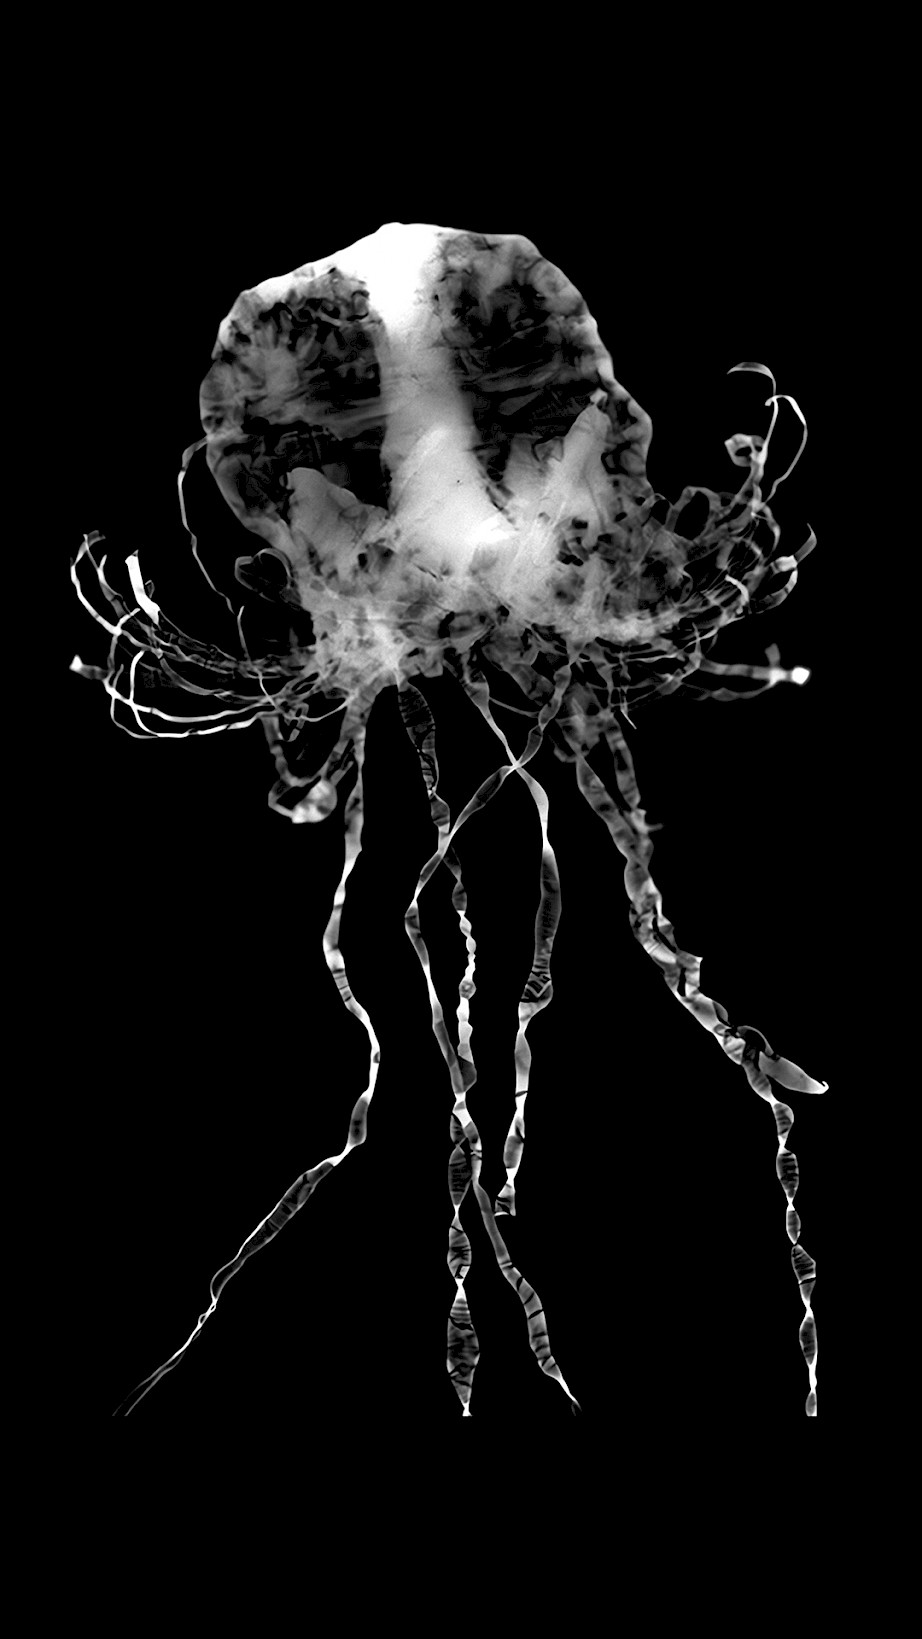 Jellyfish Photogram Series: Reprised (2019). 8” x 10” inches. Developed photogram.